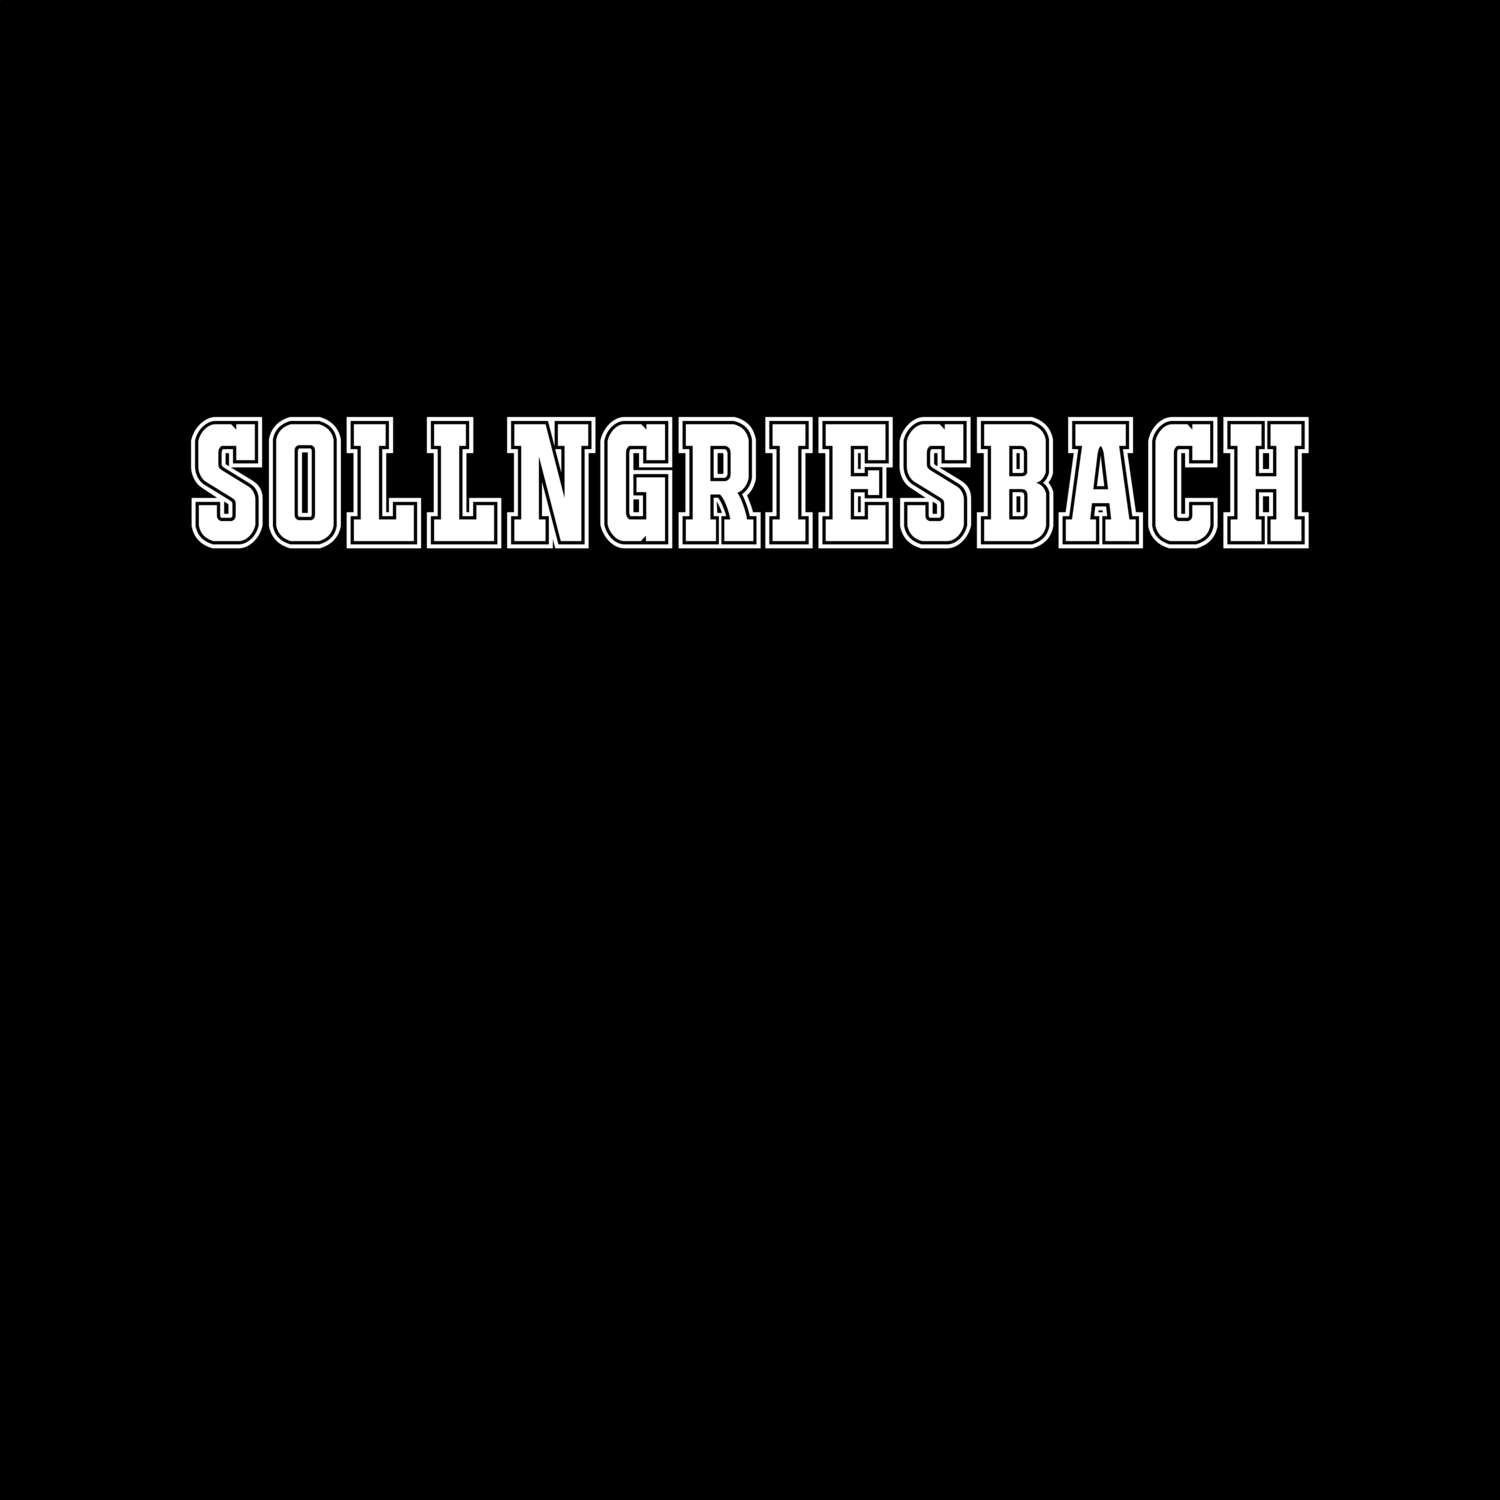 Sollngriesbach T-Shirt »Classic«